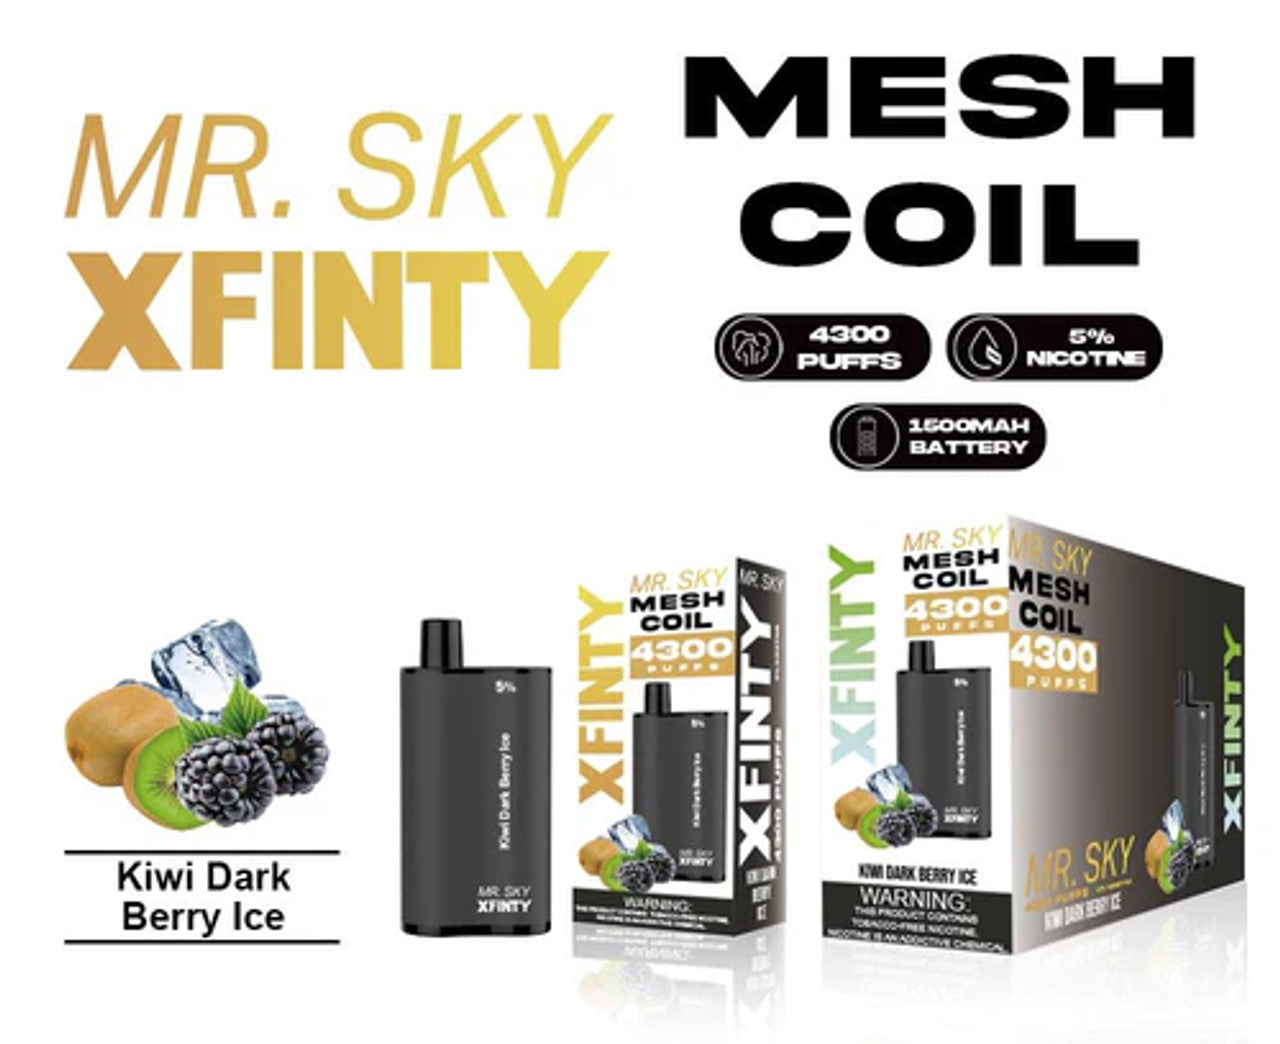 XFINITY Mr. Sky 4300 Puffs Disposable 5% Nicotine